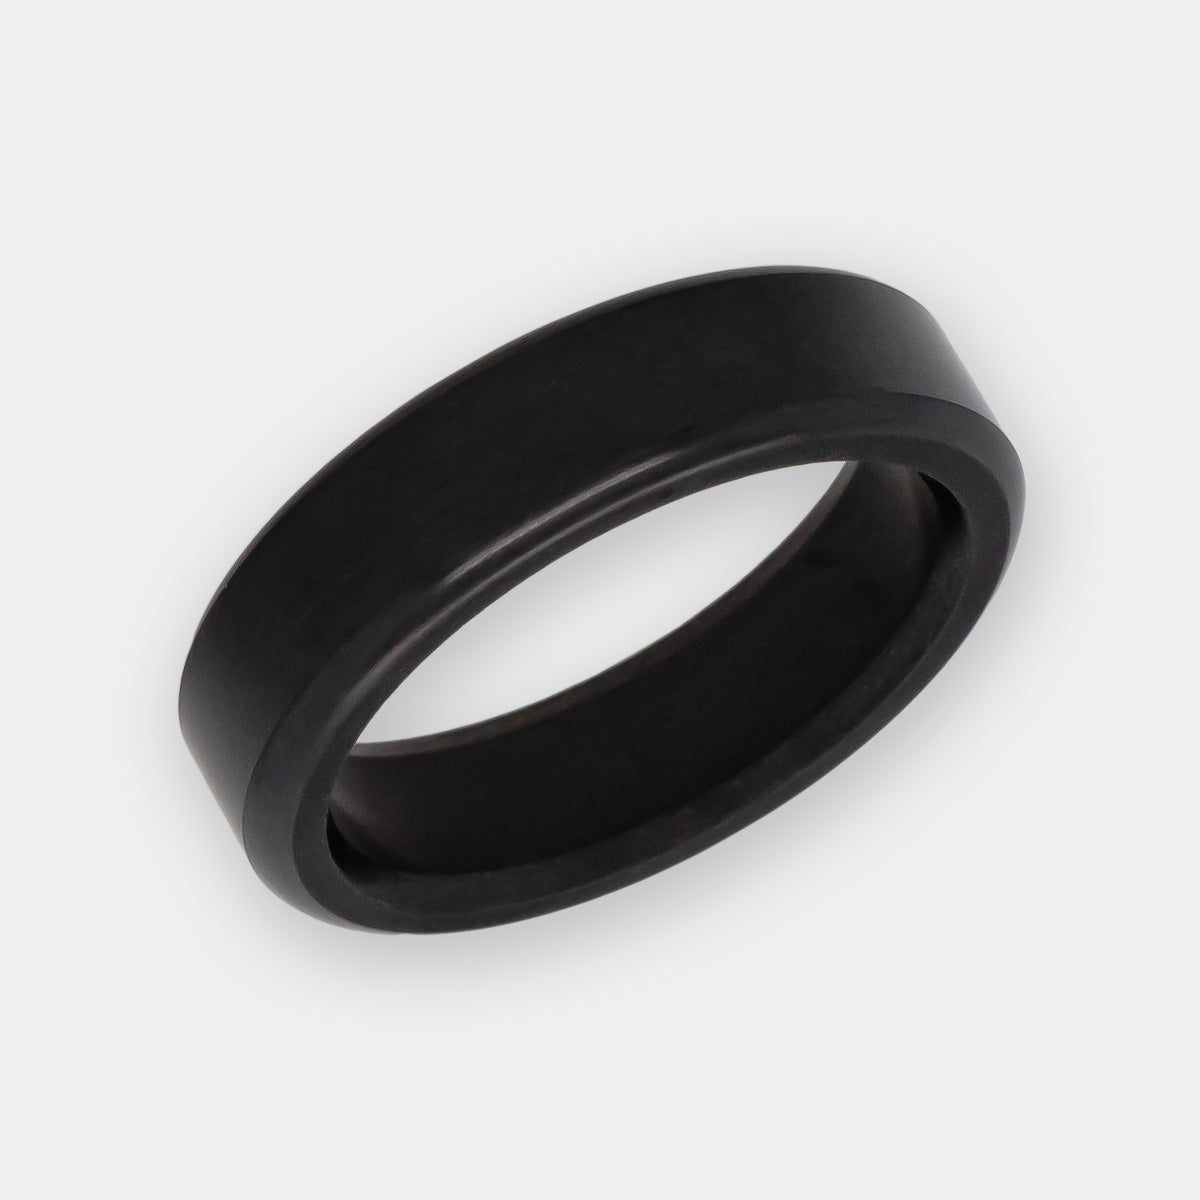 Solid Black Diamond Ring with Rounded Edge on White Background | Elysium Black Diamond Ring - Kratos 6mm | Men's Black Diamond Wedding Band | Products | Image 1